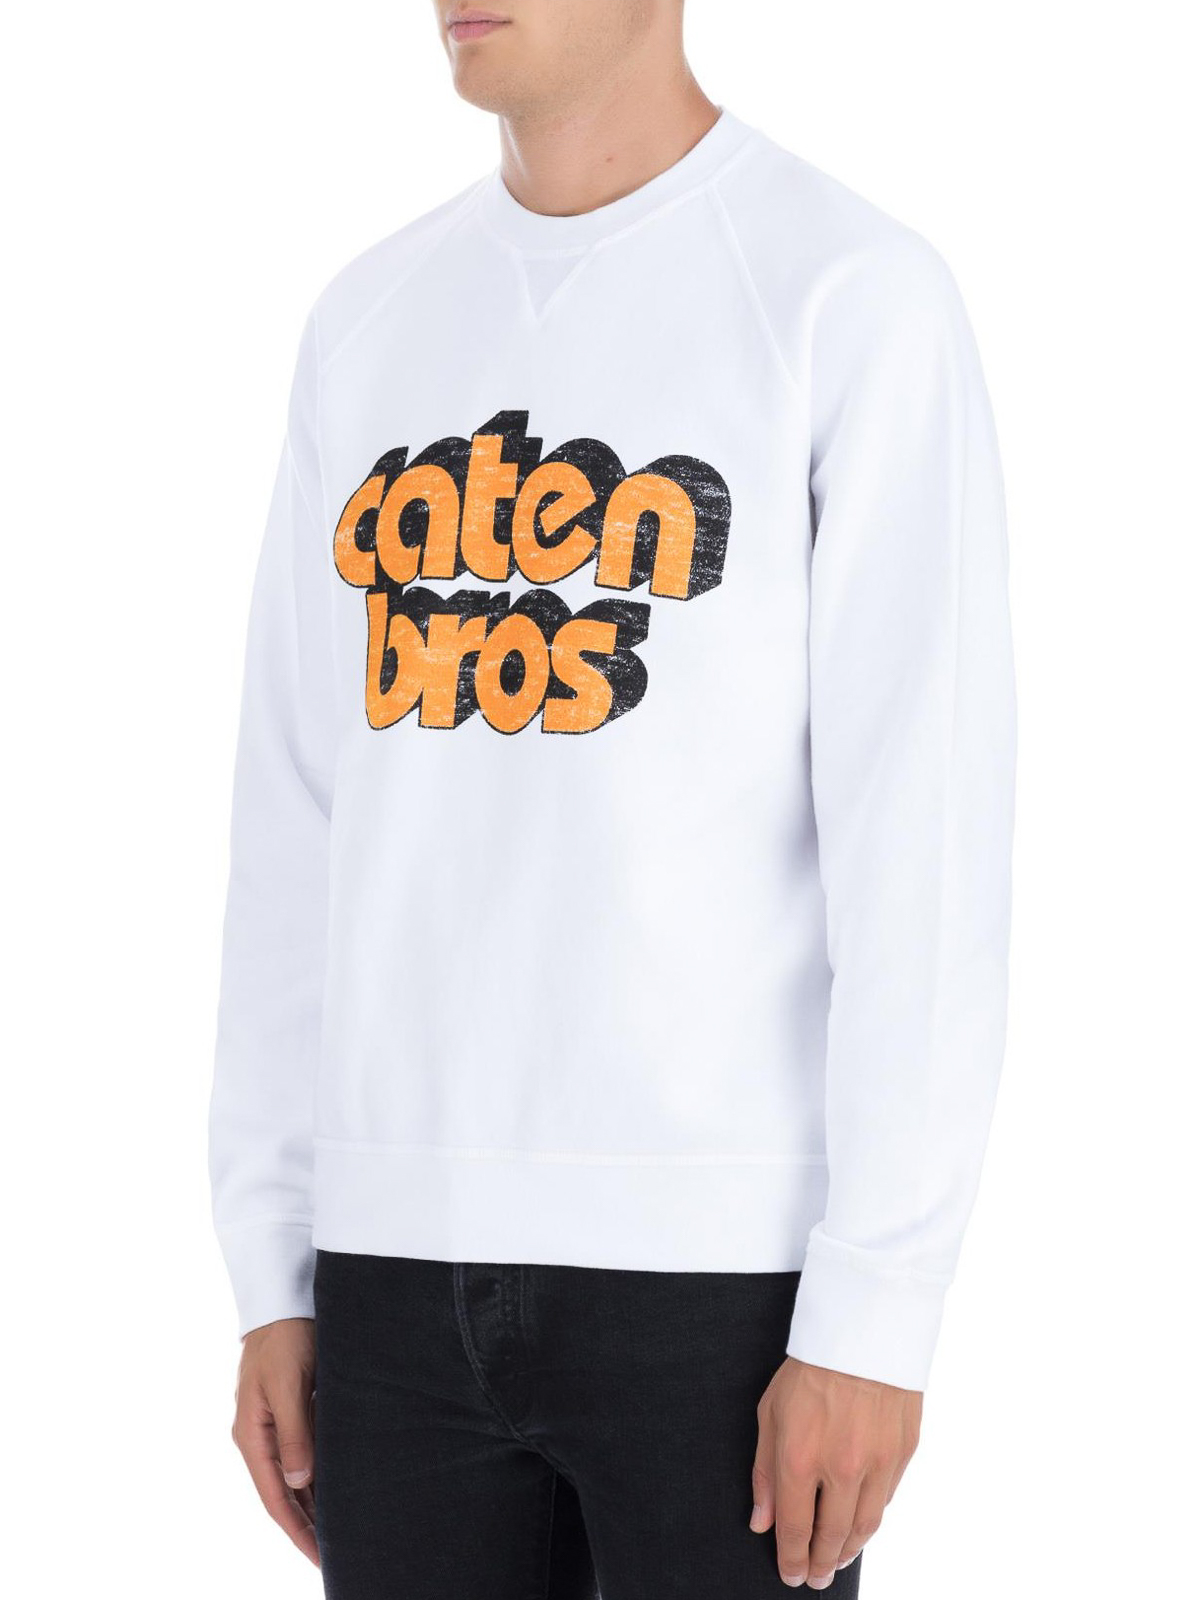 Dsquared2 - Caten Bros sweatshirt 